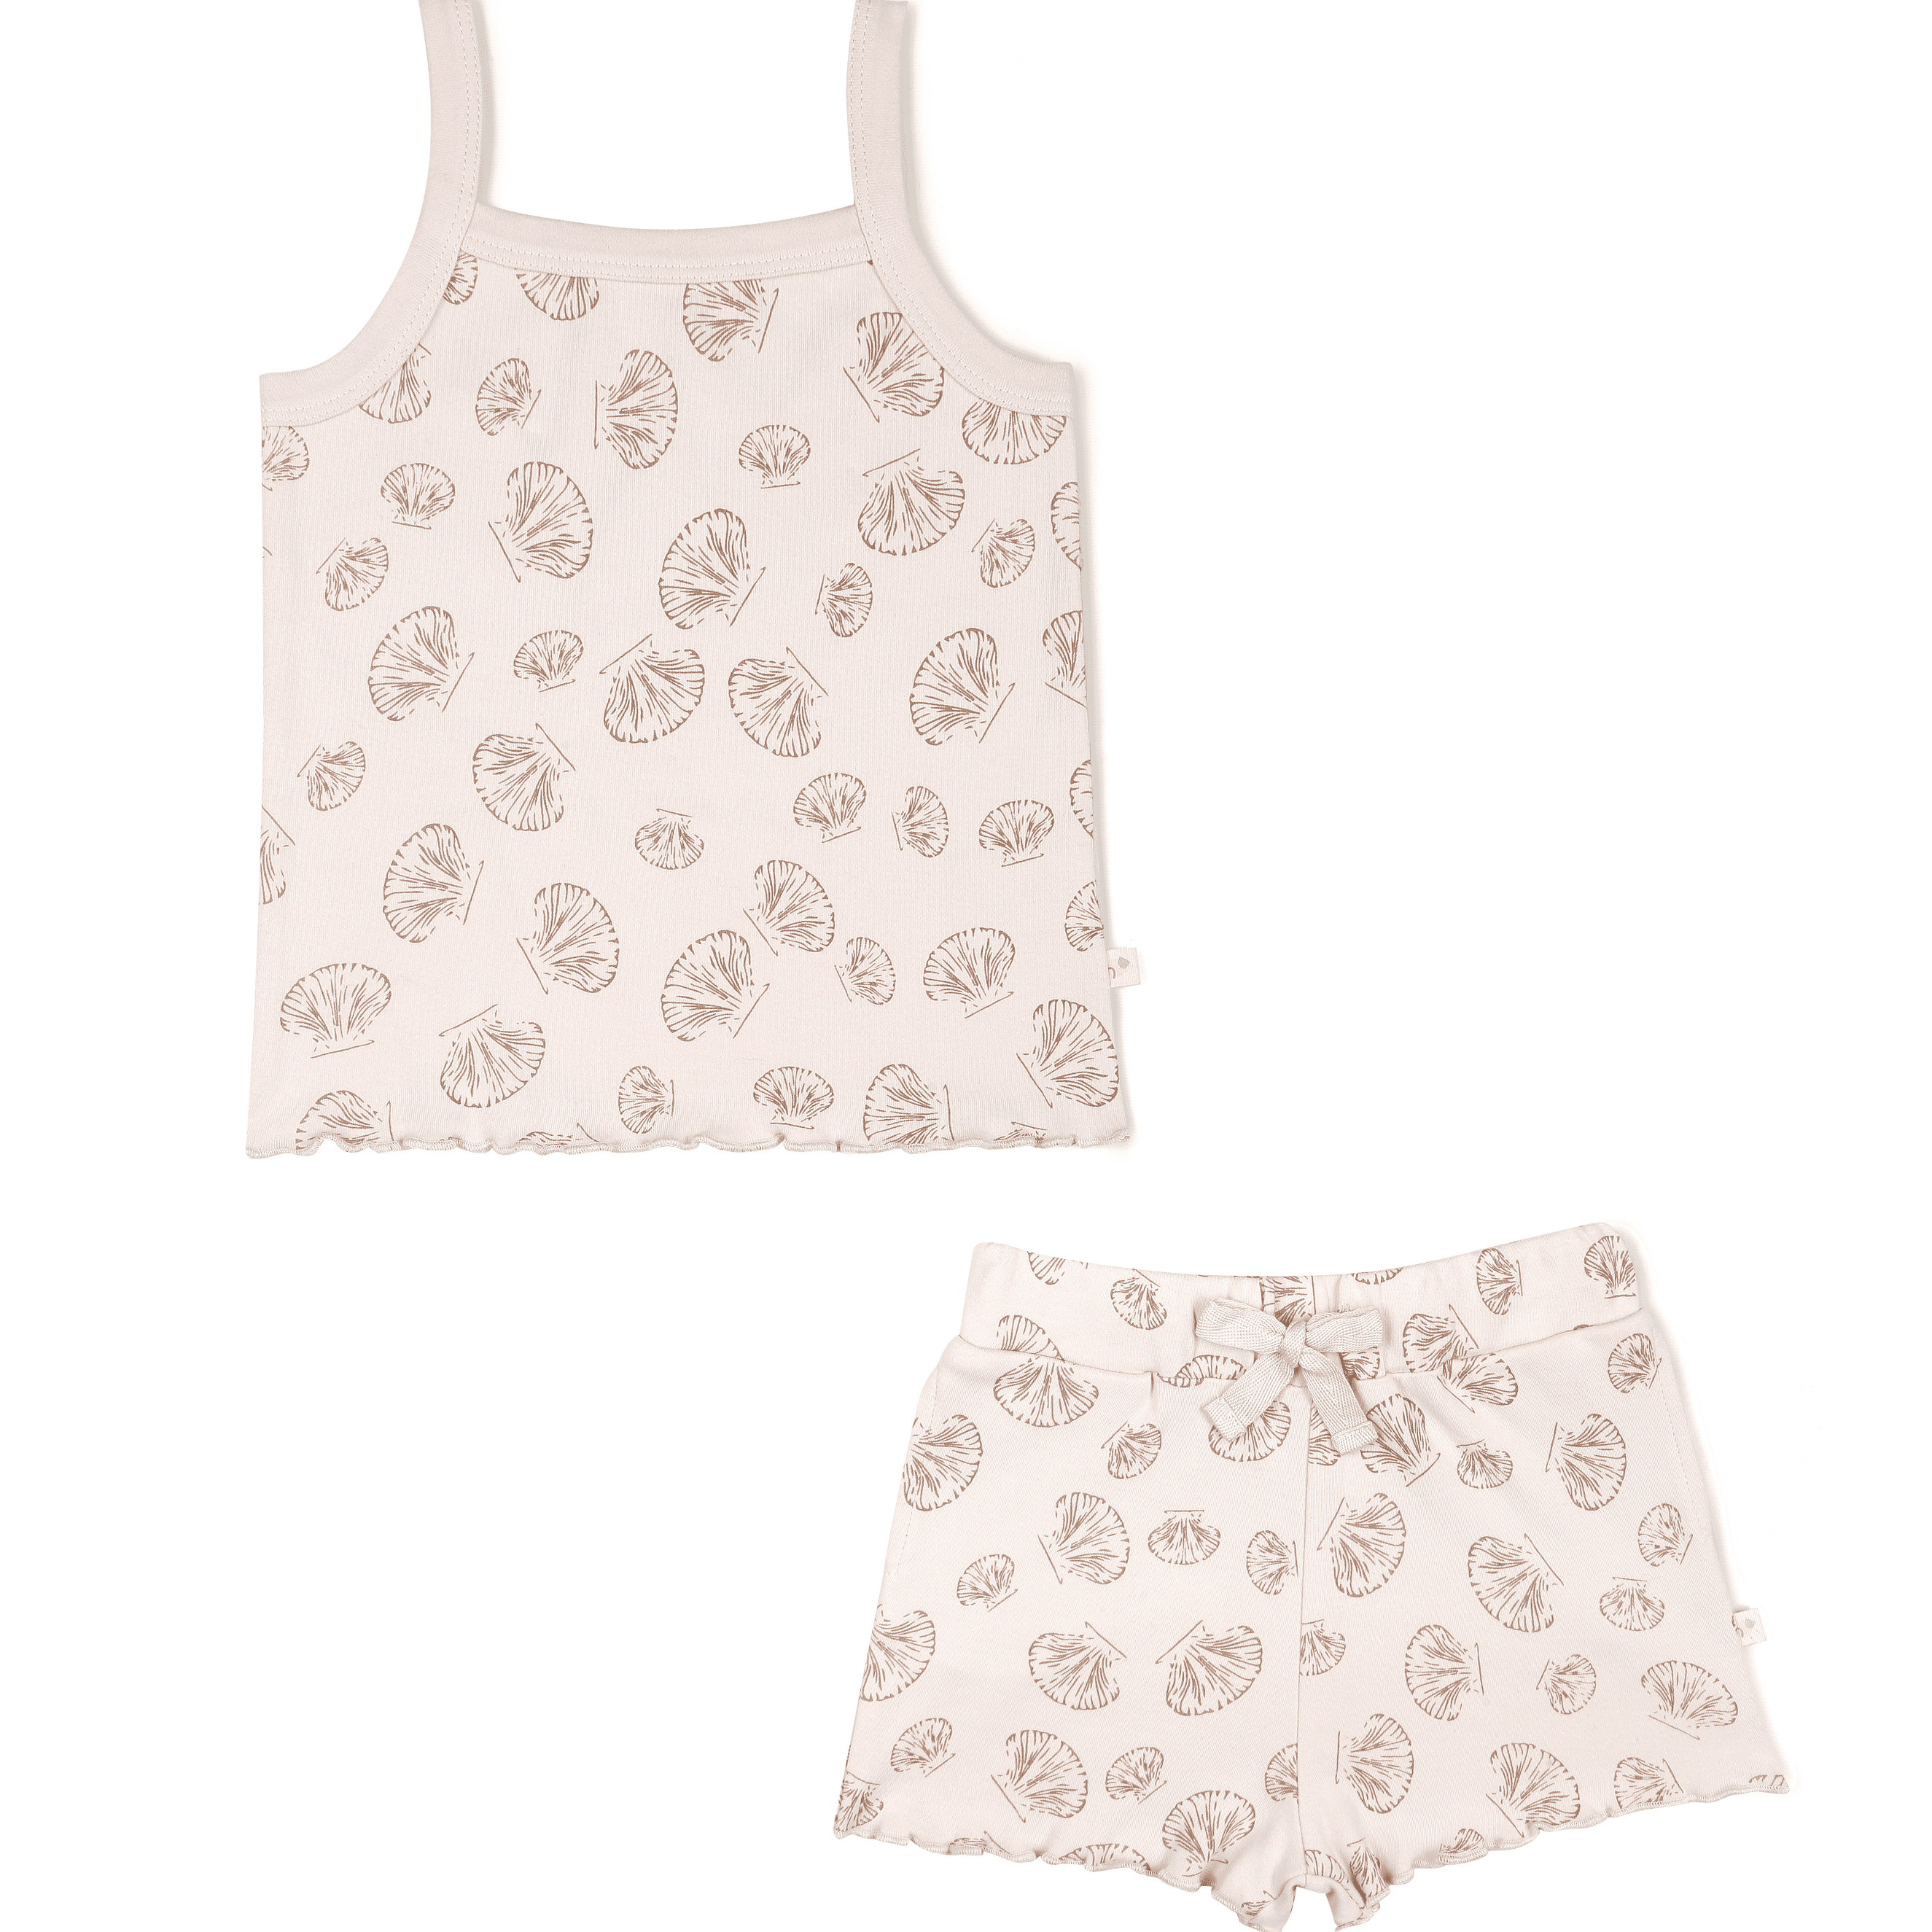 A matching set of Makemake Organics Organic Spaghetti Top & Shorts Set - Seashells, displayed on a white background. The shorts have a drawstring at the waist.